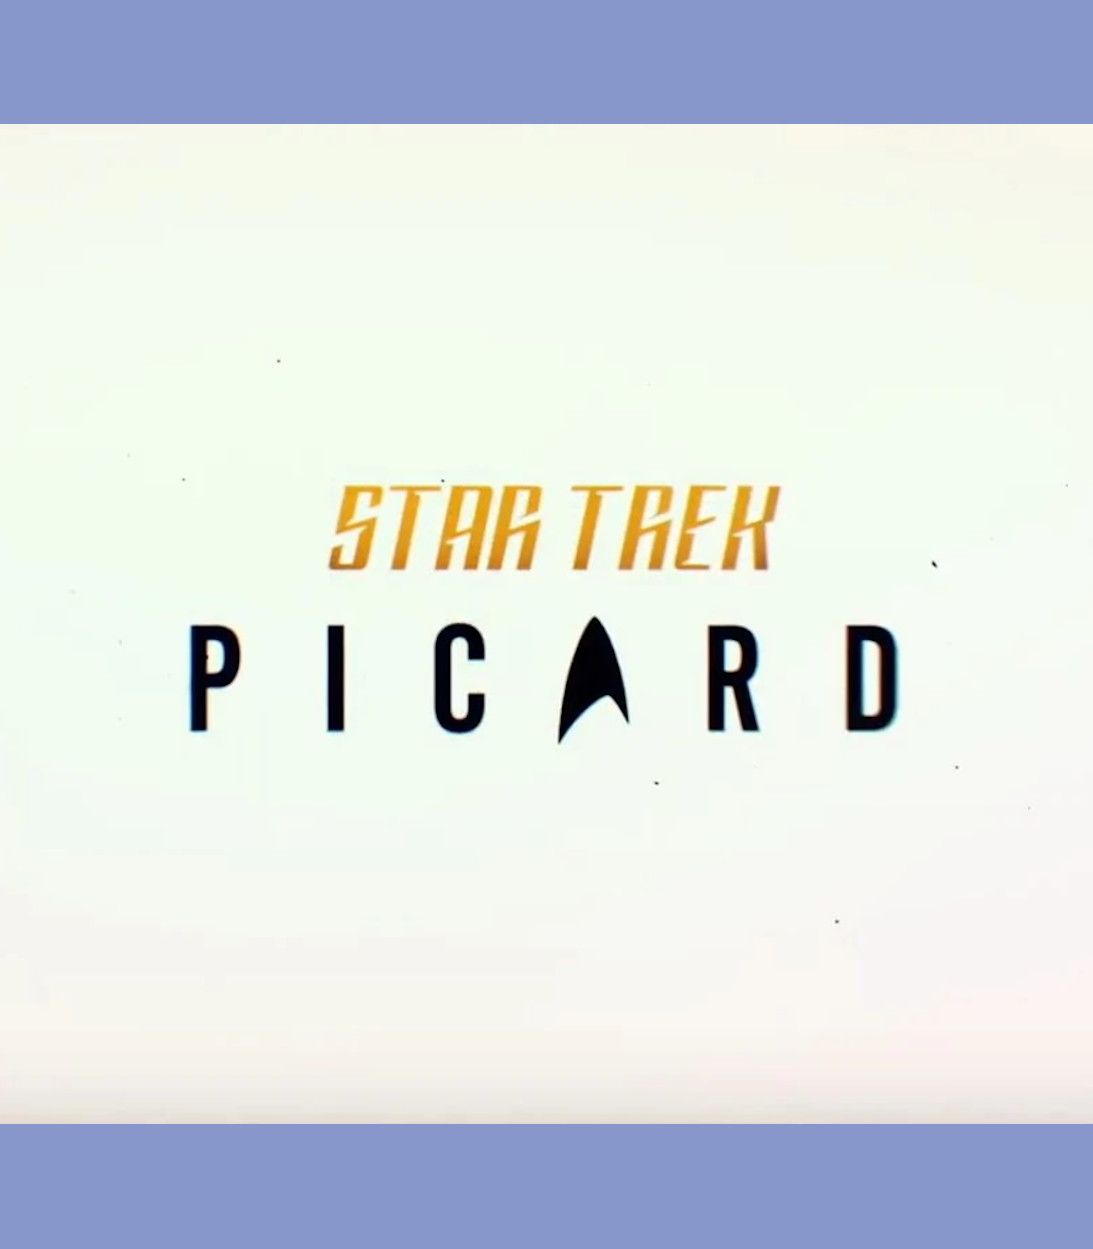 1093 Star Trek Picard logo